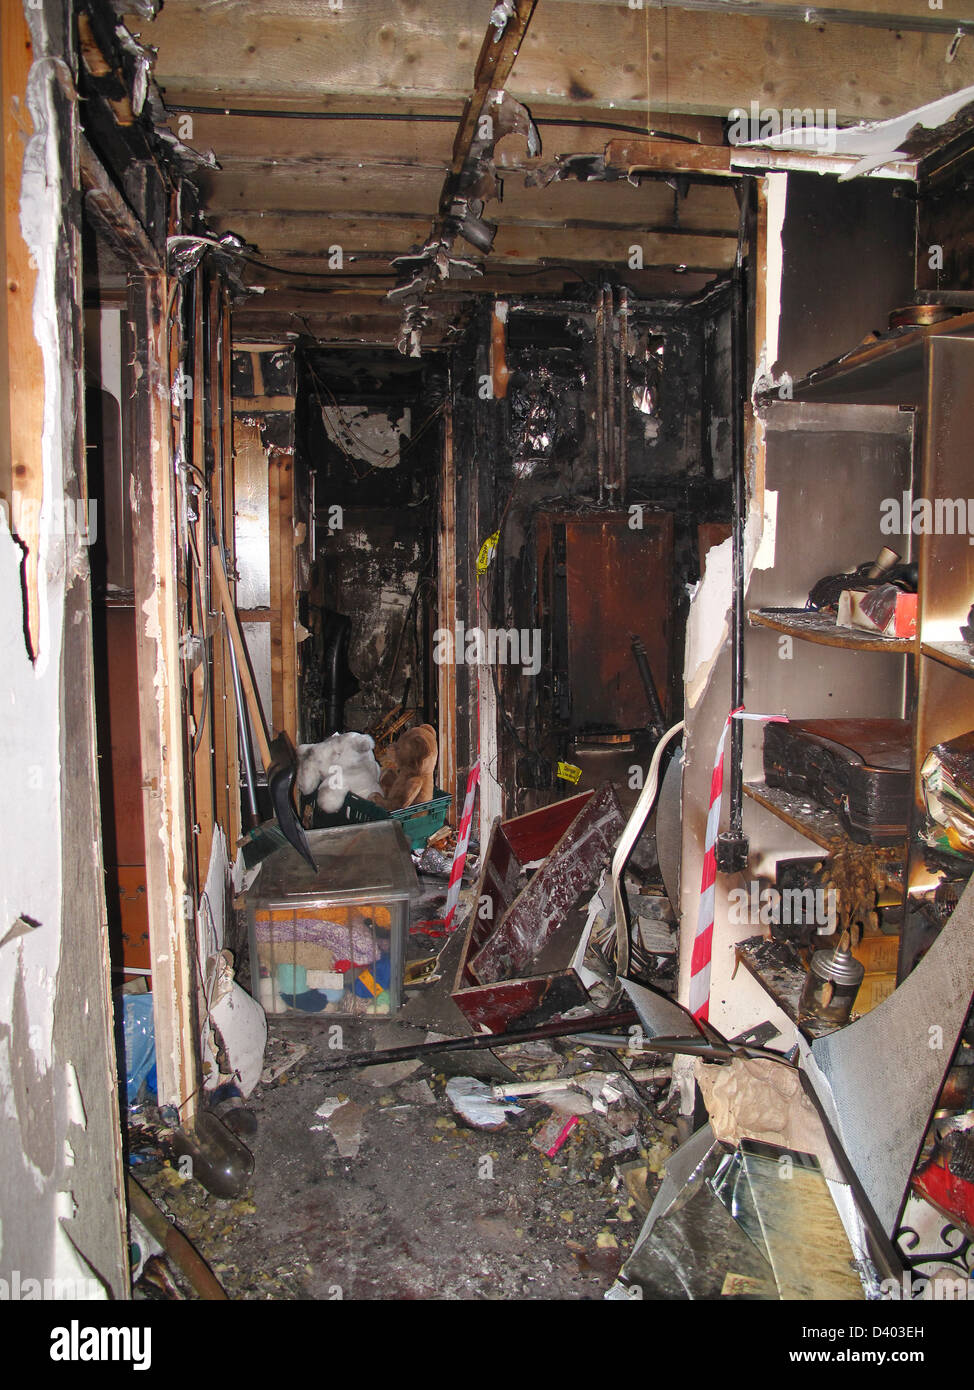 Interior of fire damaged house Stock Photo - Alamy